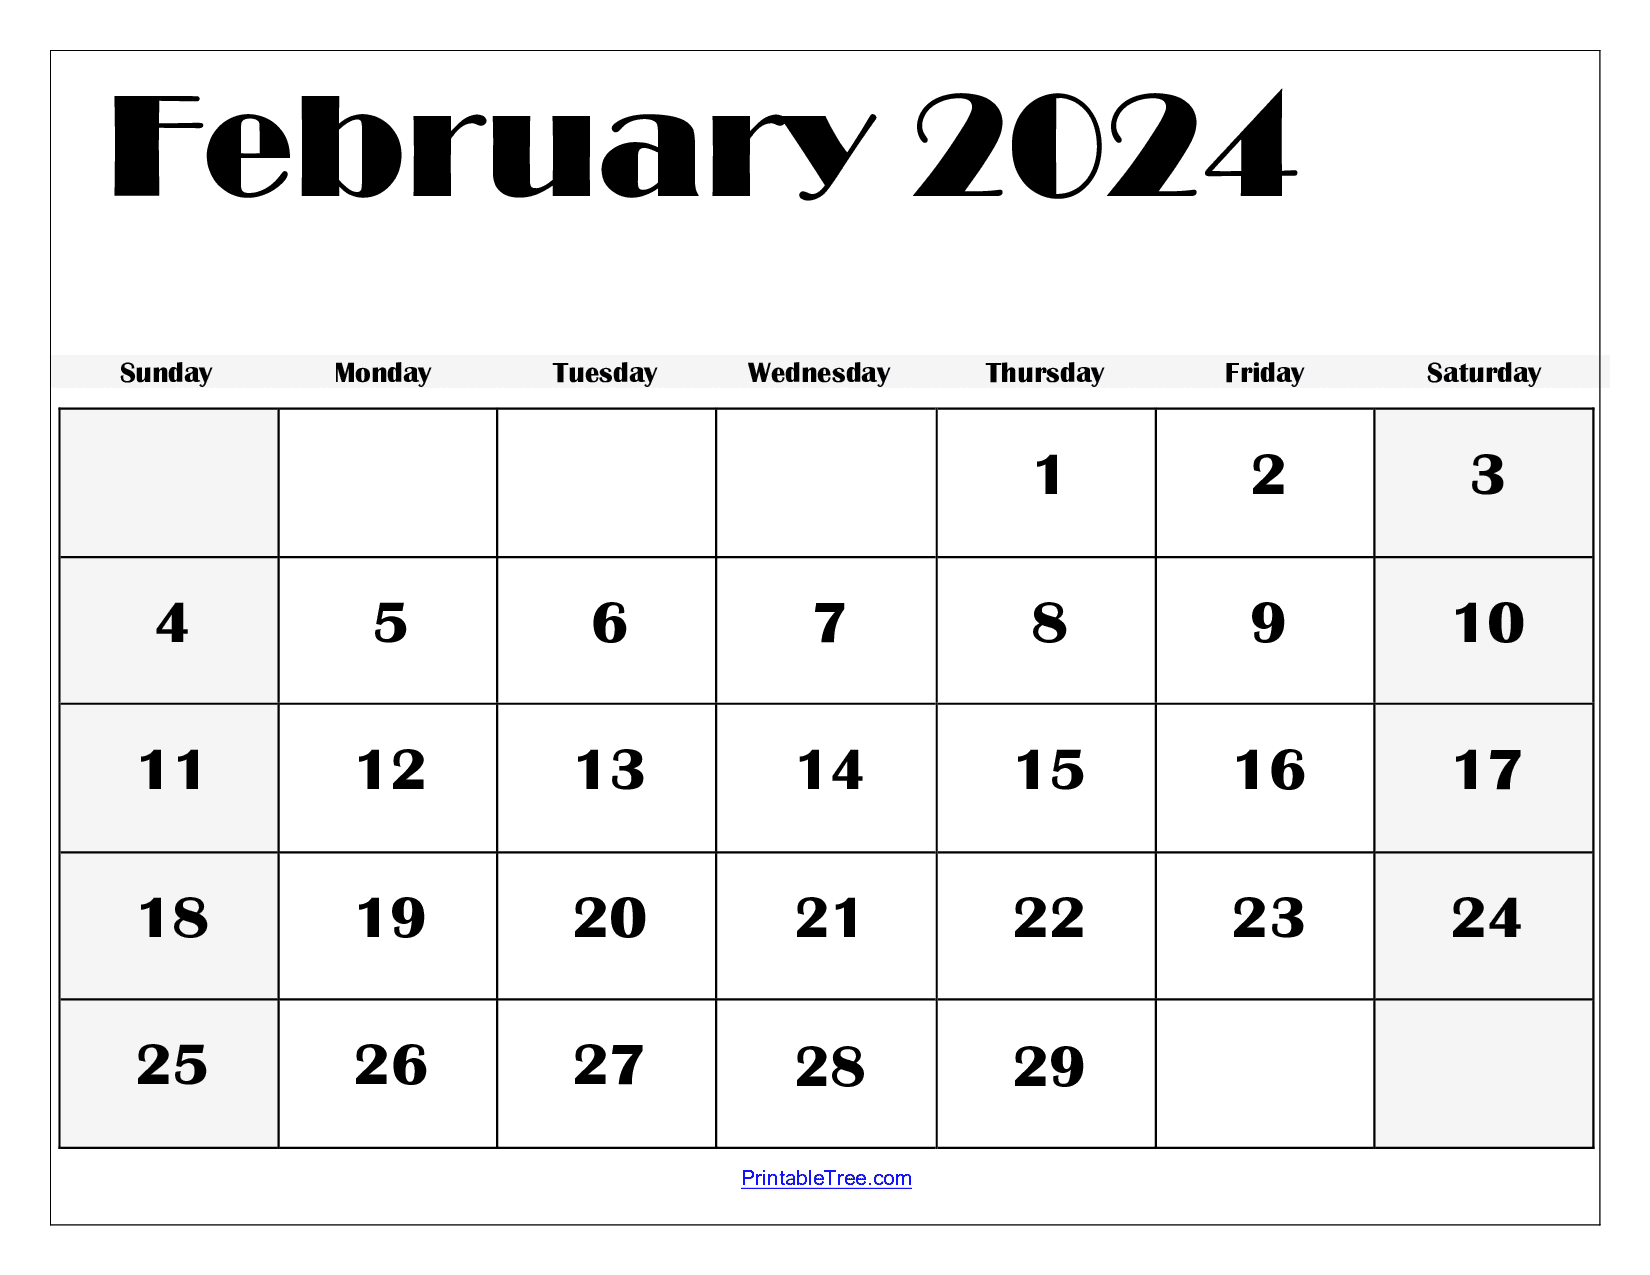 February 2024 Calendar Printable Pdf Template With Holidays for Free Printable 2024 February Calendar